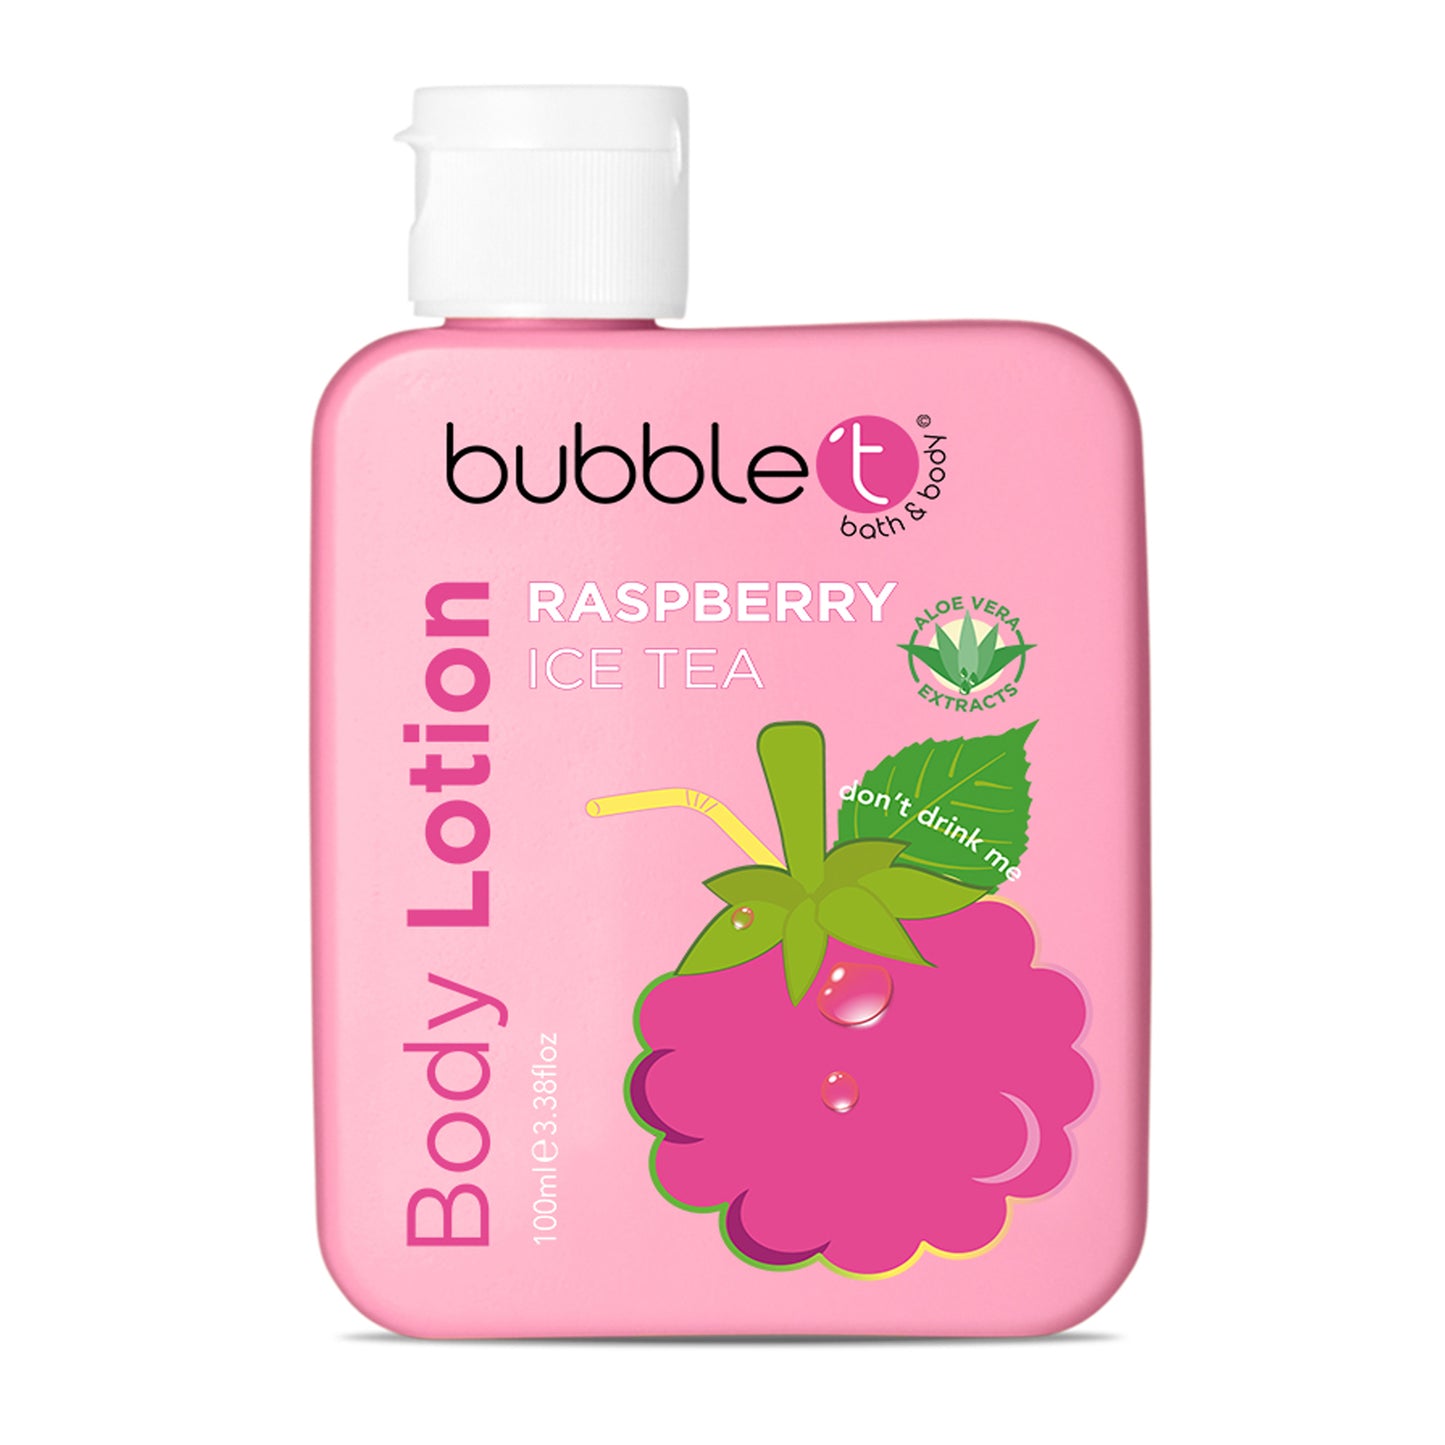 Bubble T raspberry ice tea body lotion